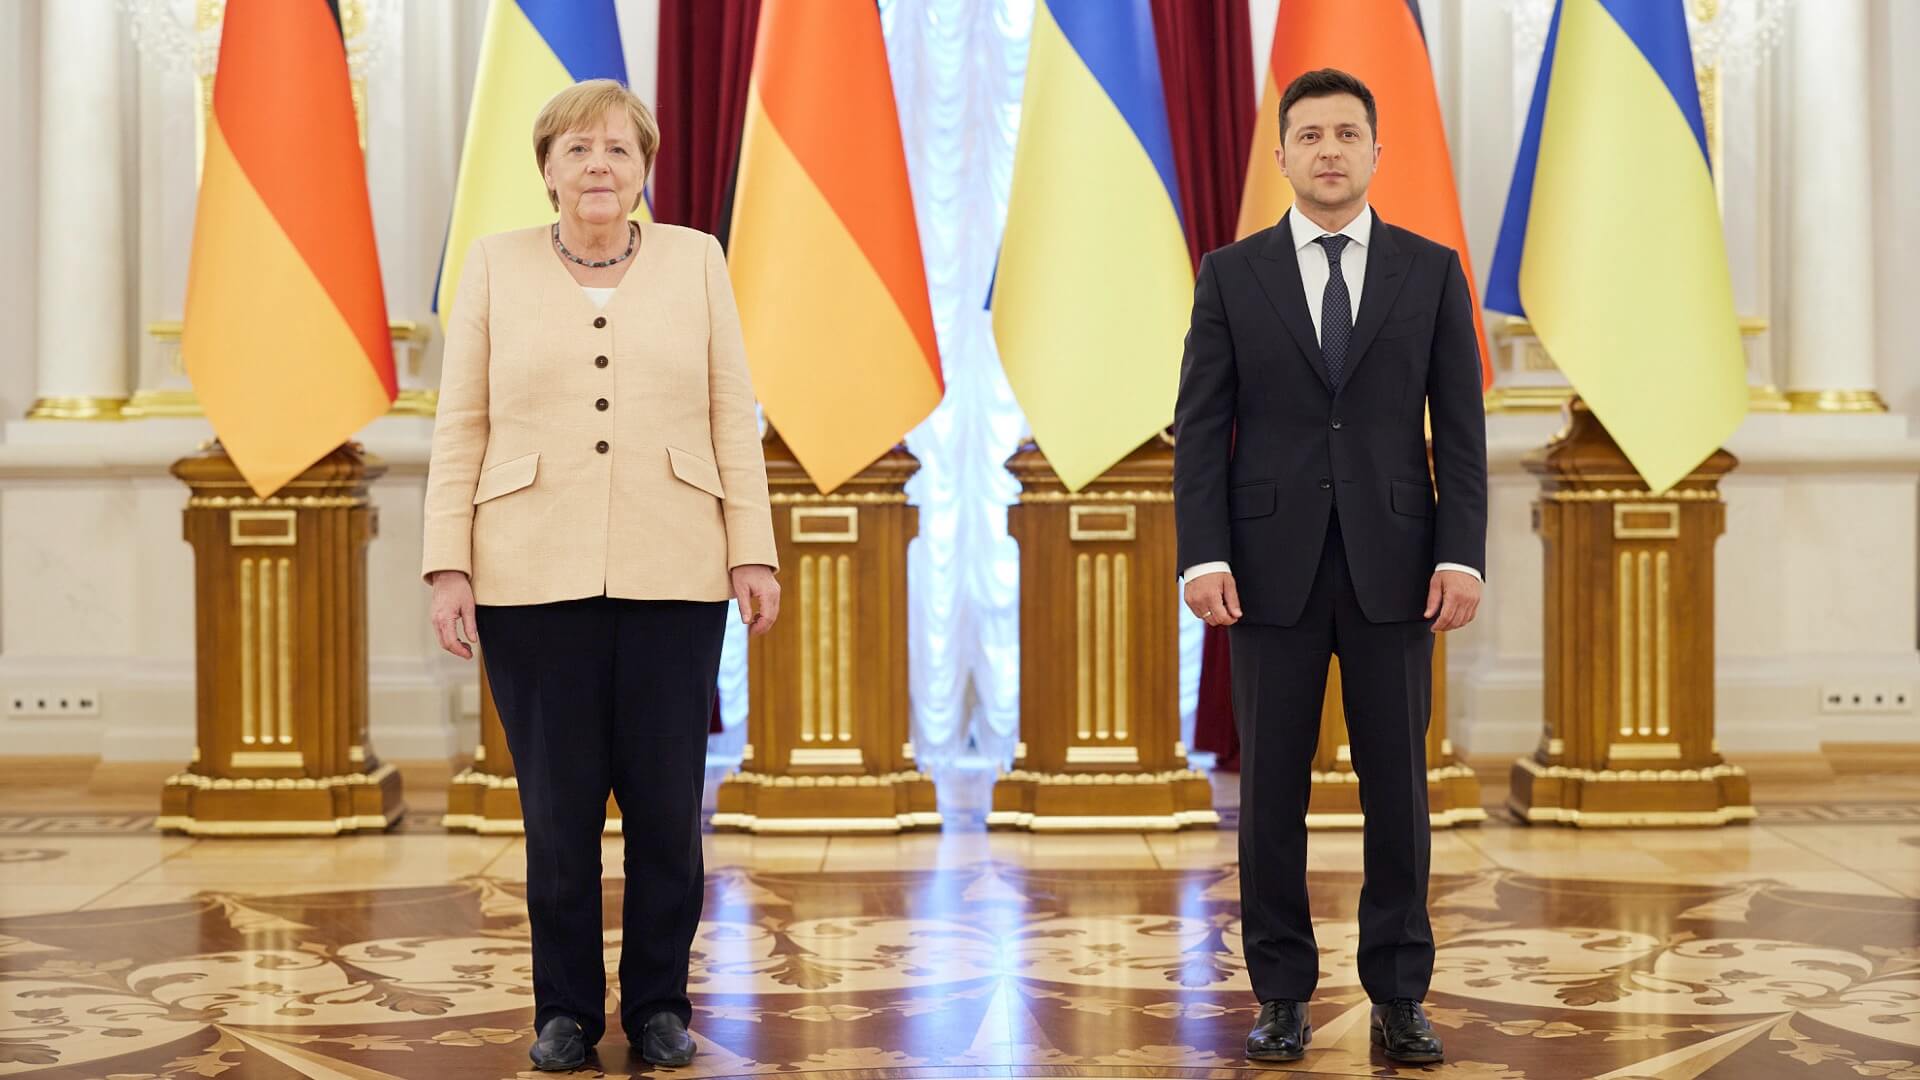 Germany’s Merkel Fails to Reassure Ukraine Over Nord Stream 2 Gas Pipeline and Crimea